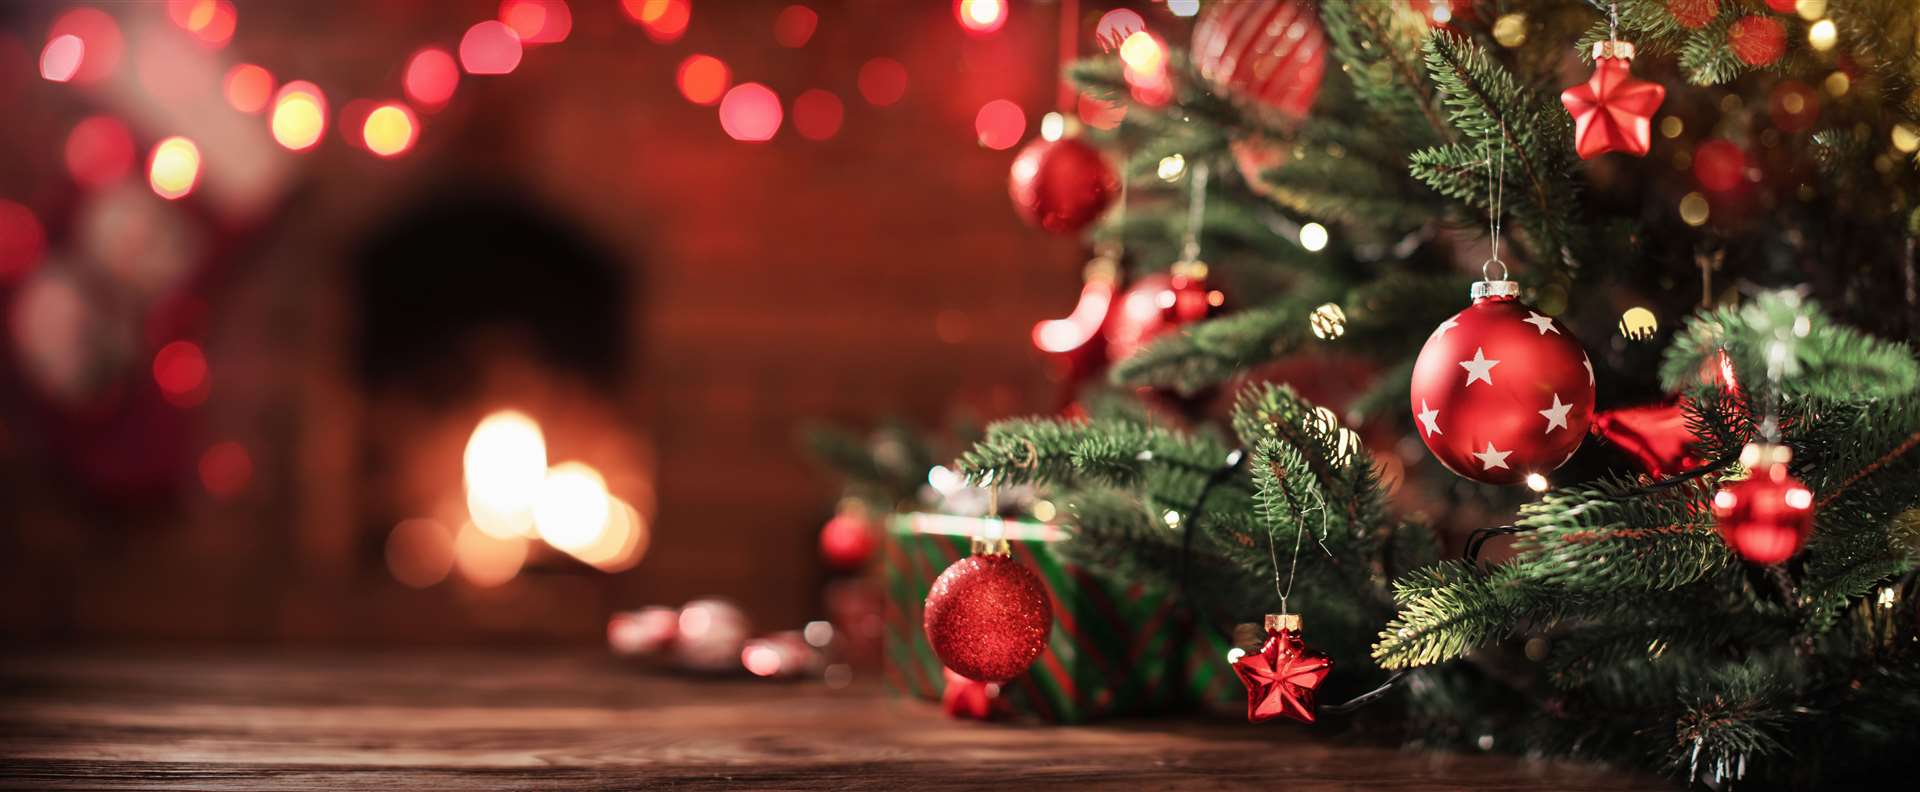 Christmas is starting too early, says columnist Lauren Abbott